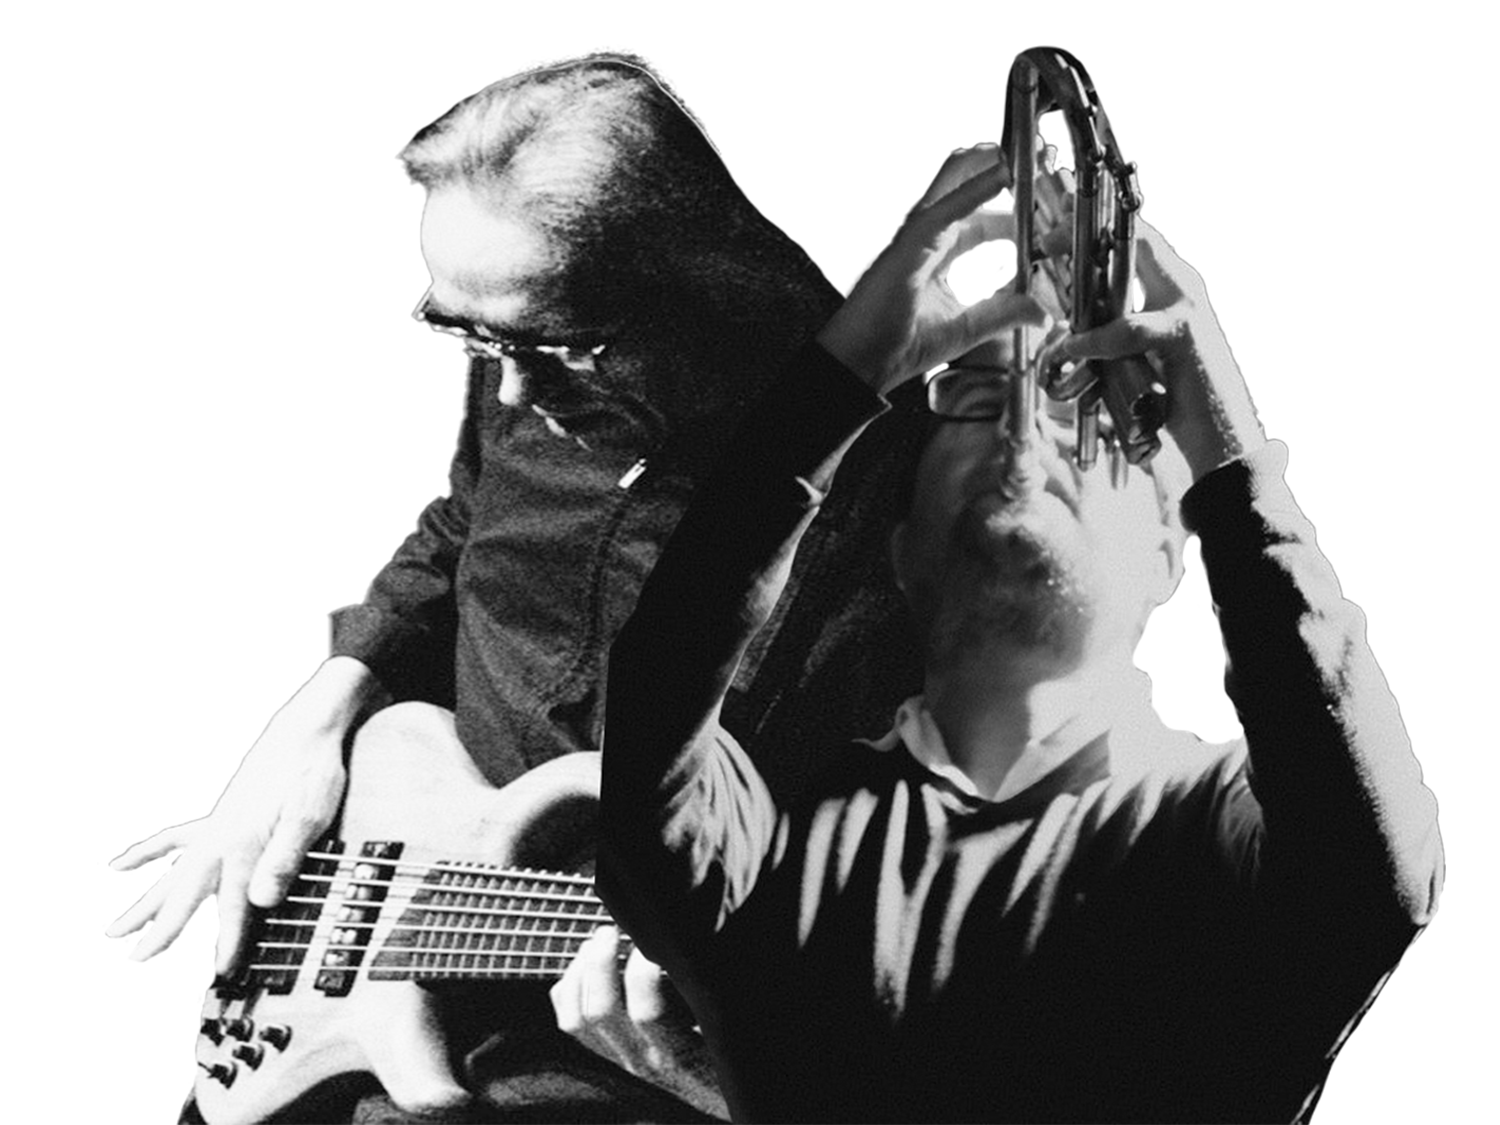 Tom Arthurs and Björn Meyer